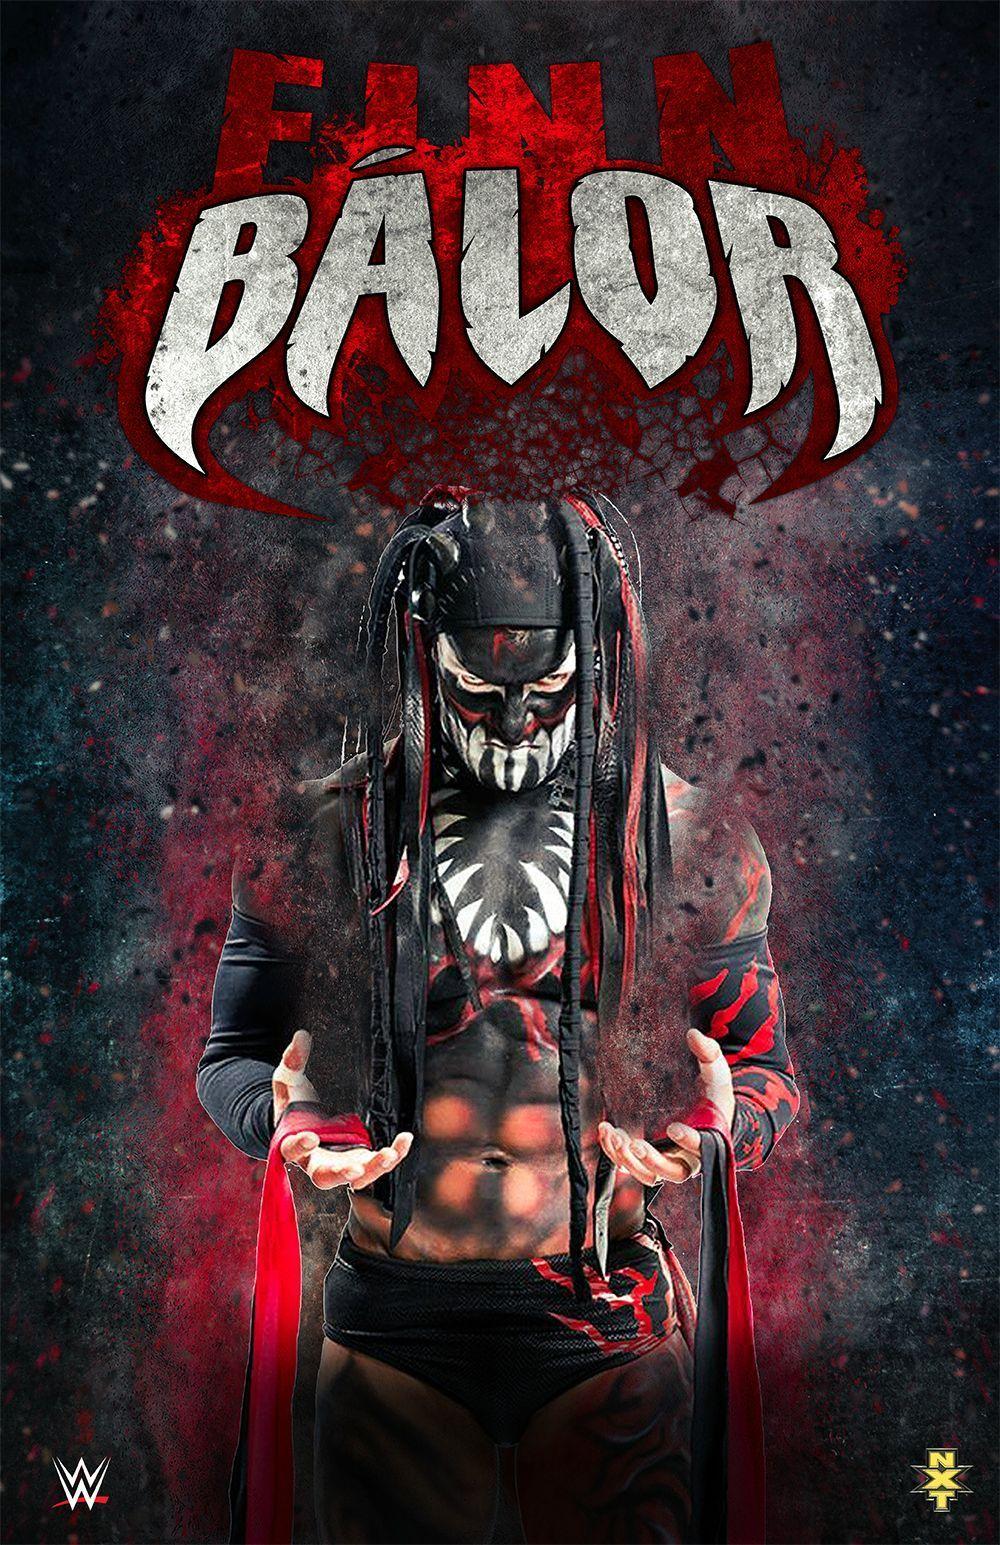 Made A Finn Balor Poster. Wrestling wwe, Wwe wallpaper, Wwe